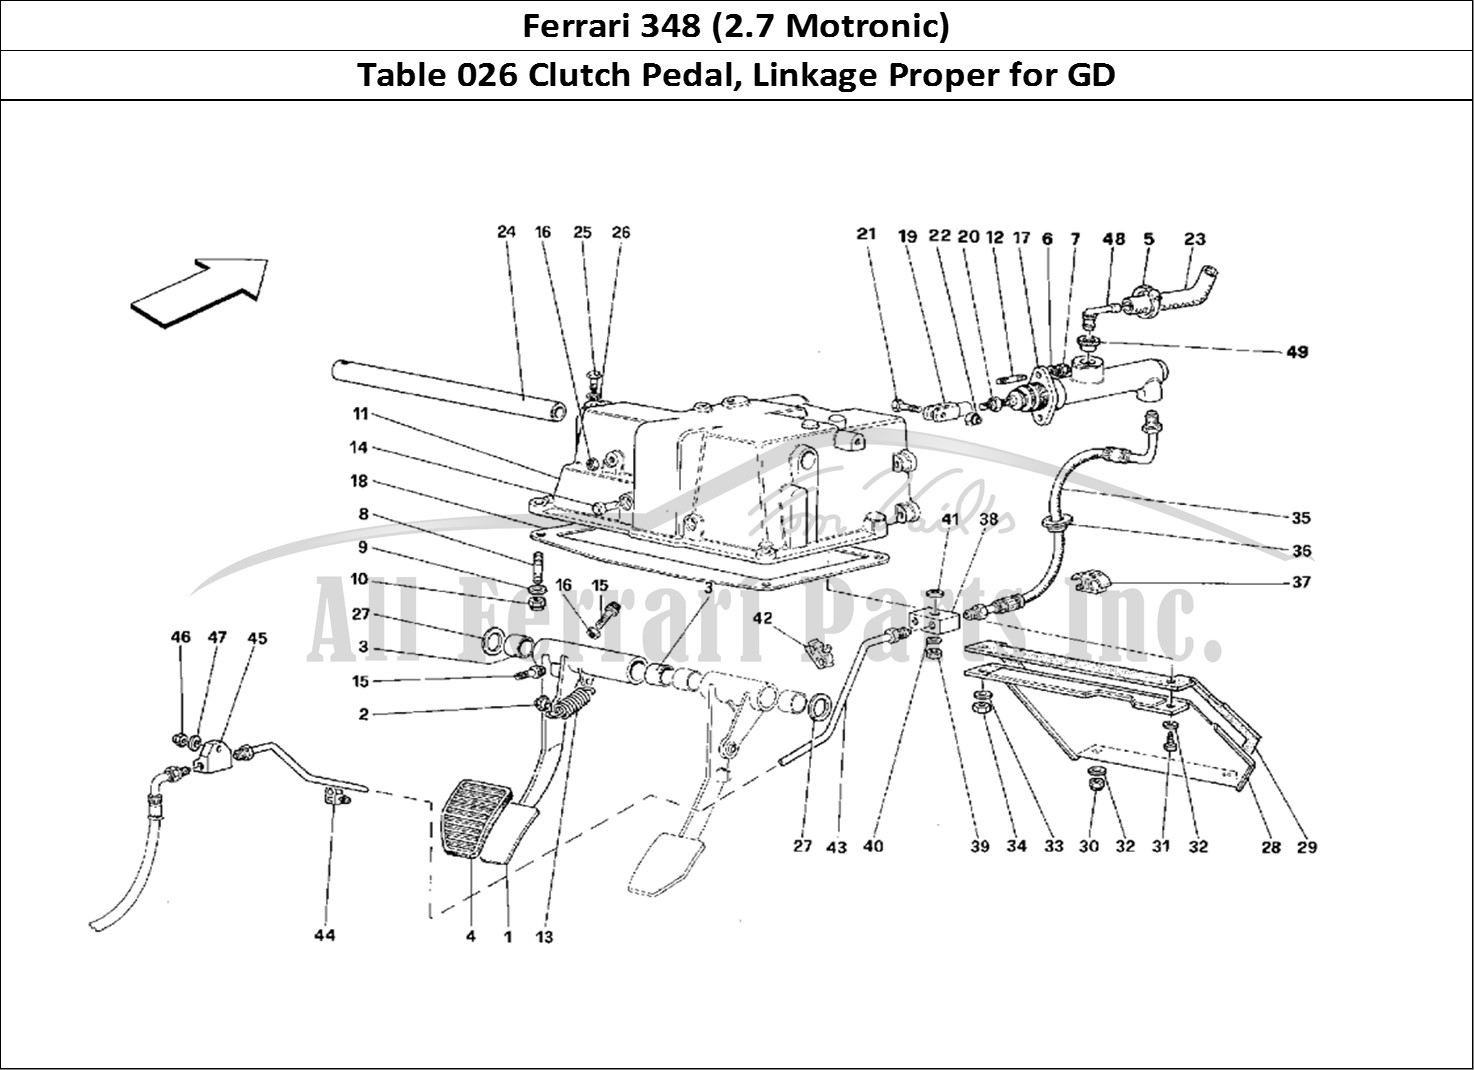 Ferrari Parts Ferrari 348 (2.7 Motronic) Page 026 Clutch Release Control -V